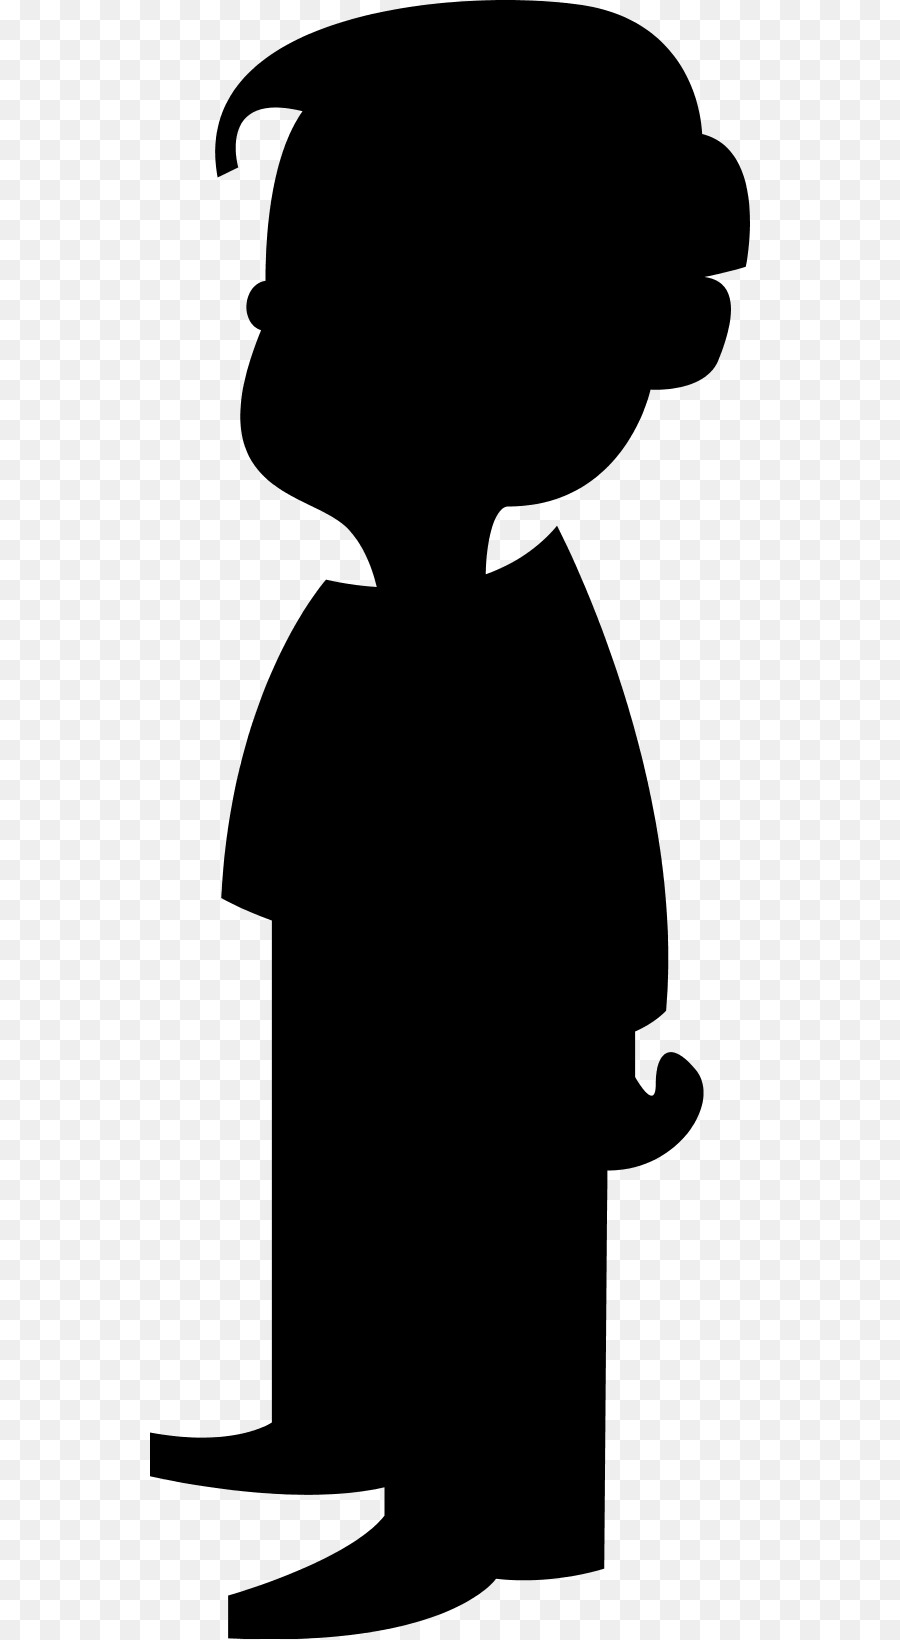 Boy Child Clip art - silhouette man png download - 600*1639 - Free Transparent  png Download.